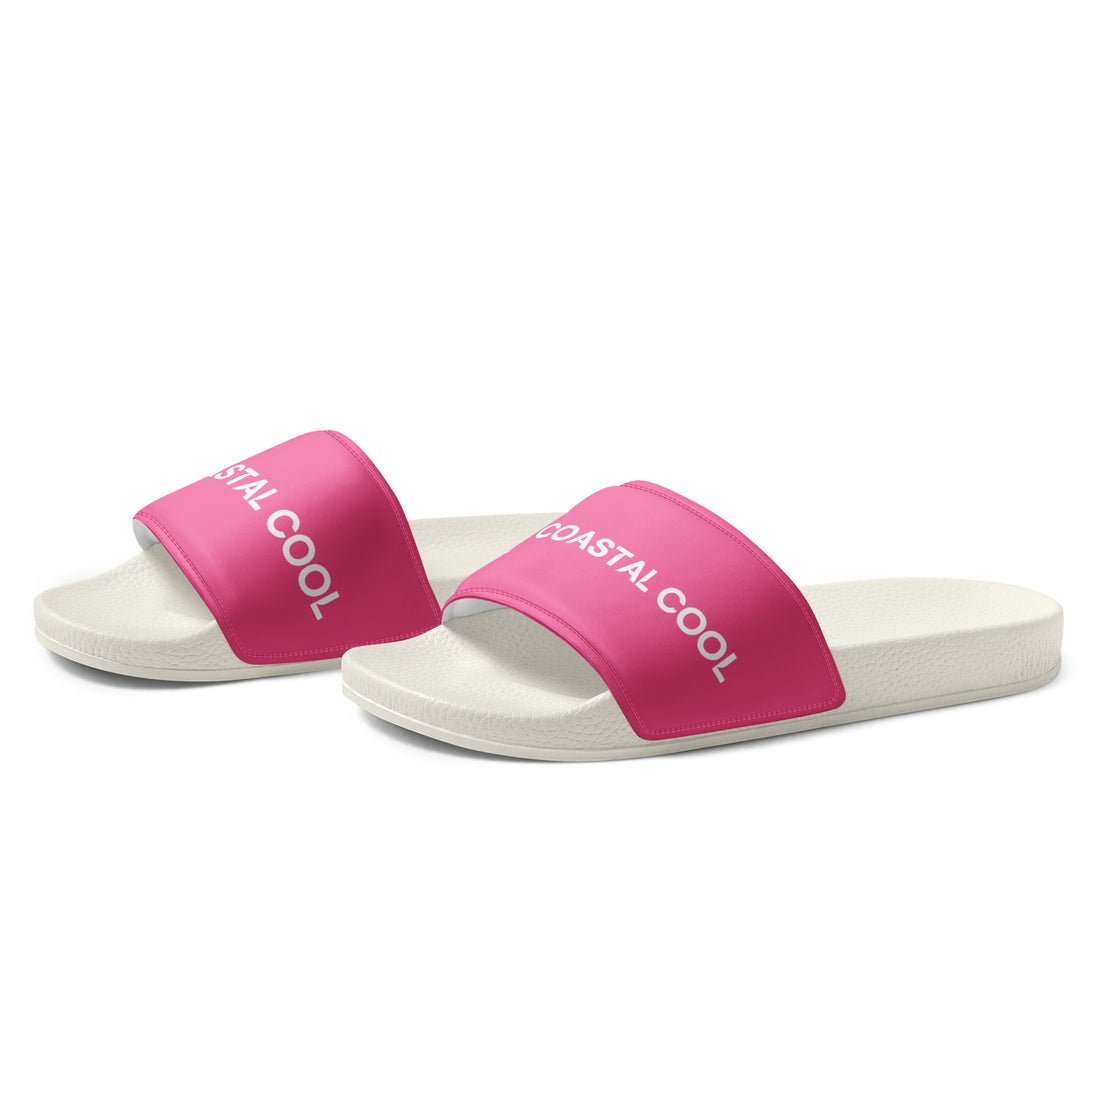 Men's Slides - Pink - Coastal Cool - Swimwear and Beachwear - Recycled fabrics